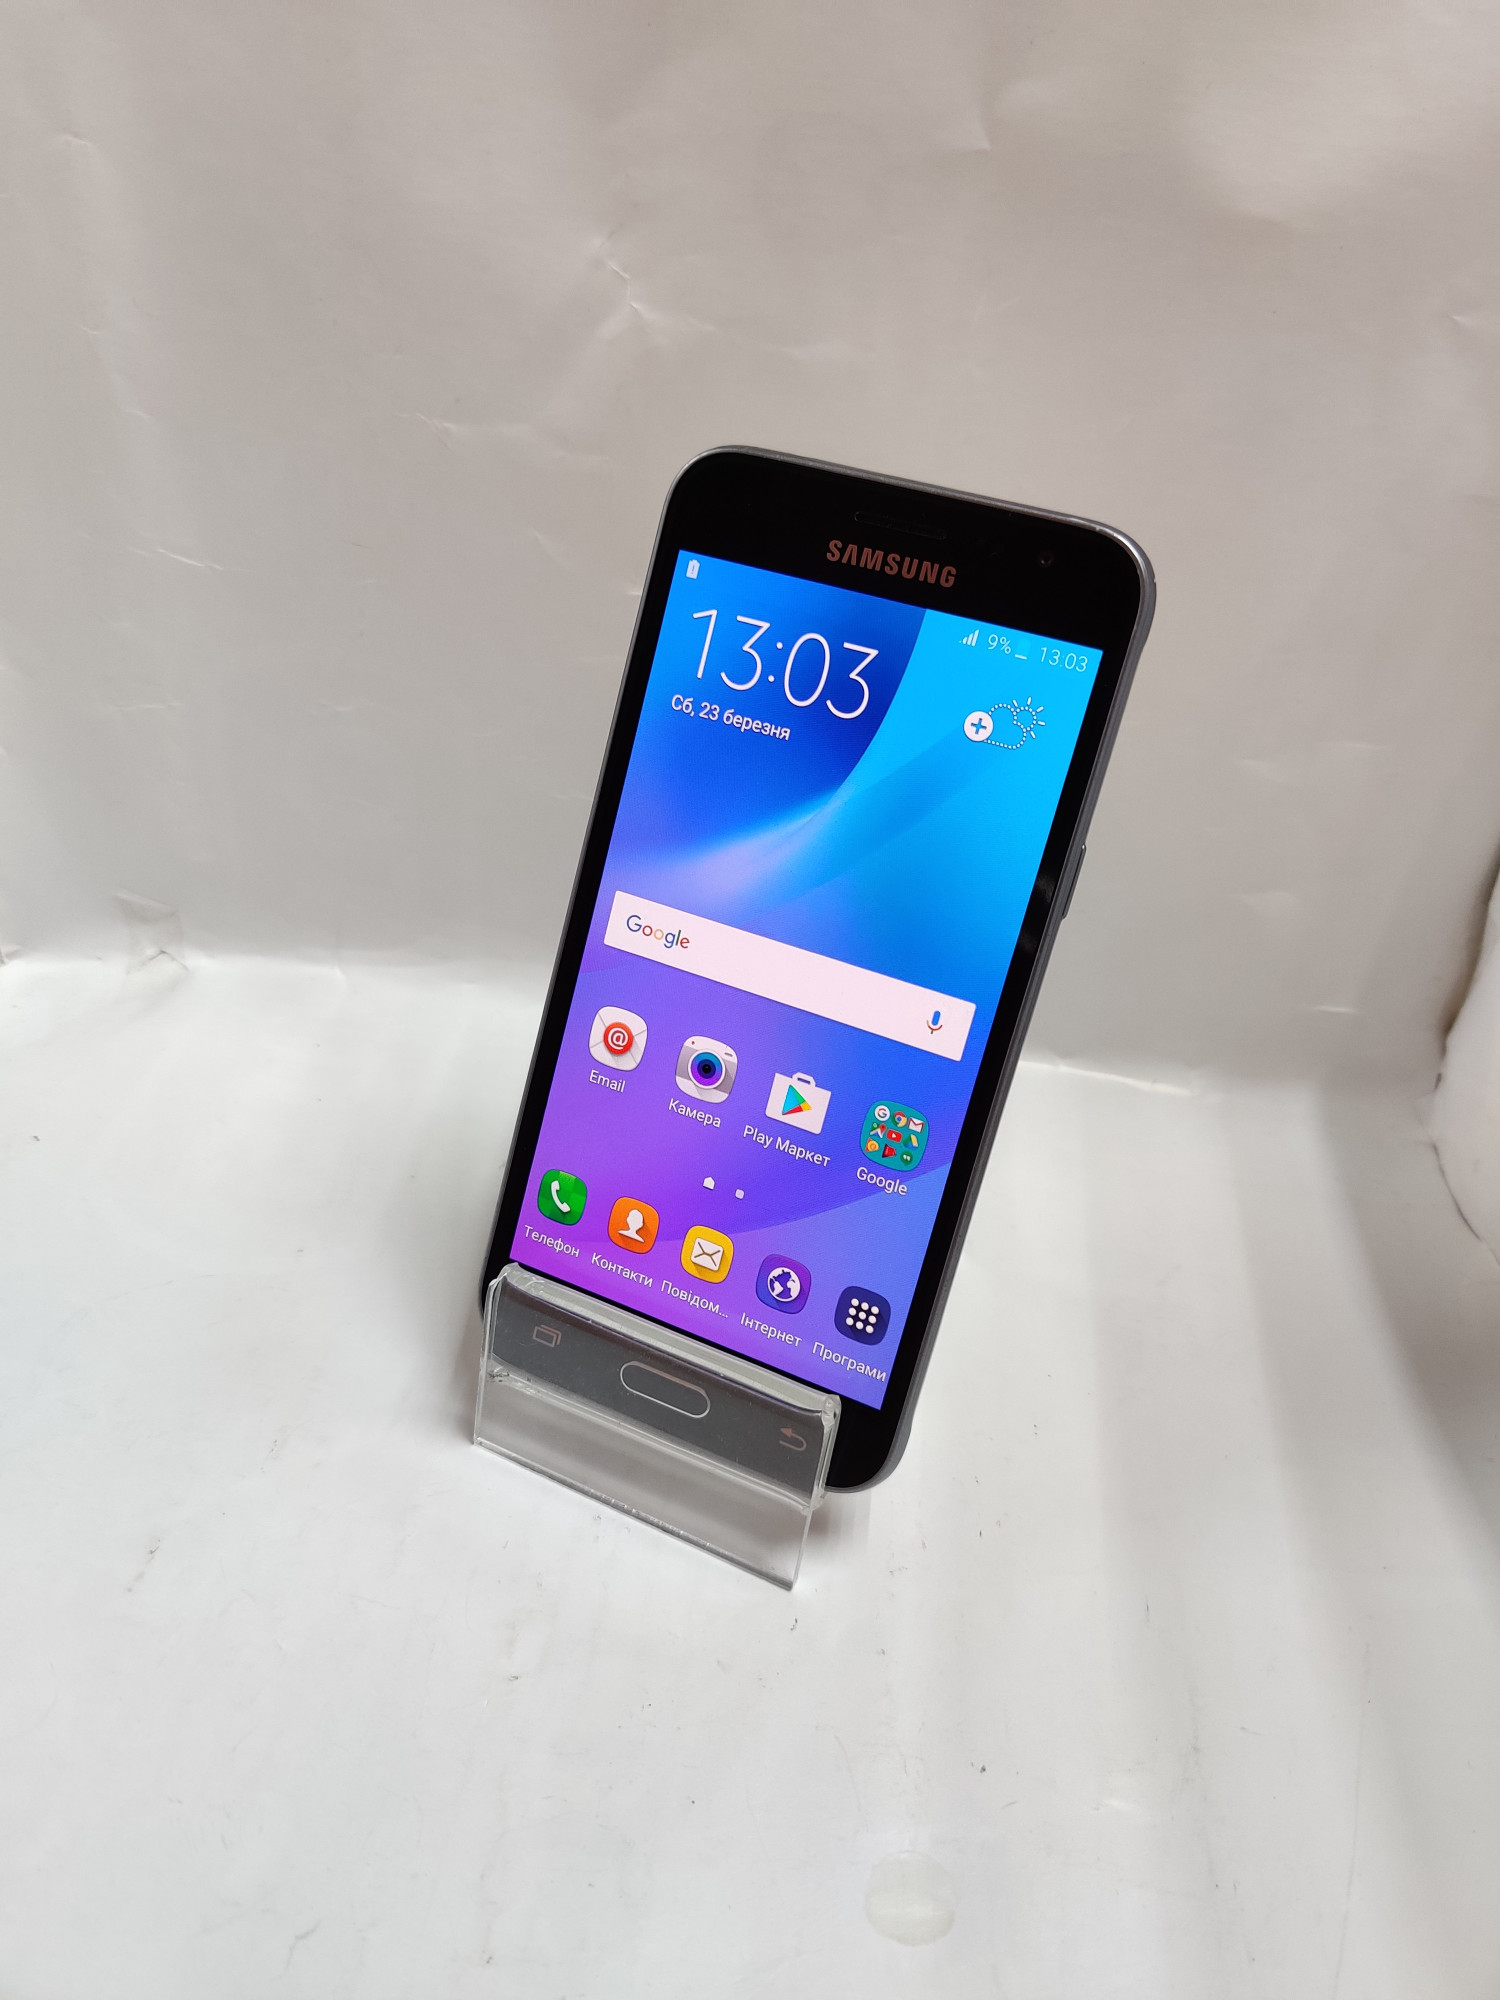 Samsung Galaxy J3 2016 White (SM-J320HZWD) 1/8Gb 0